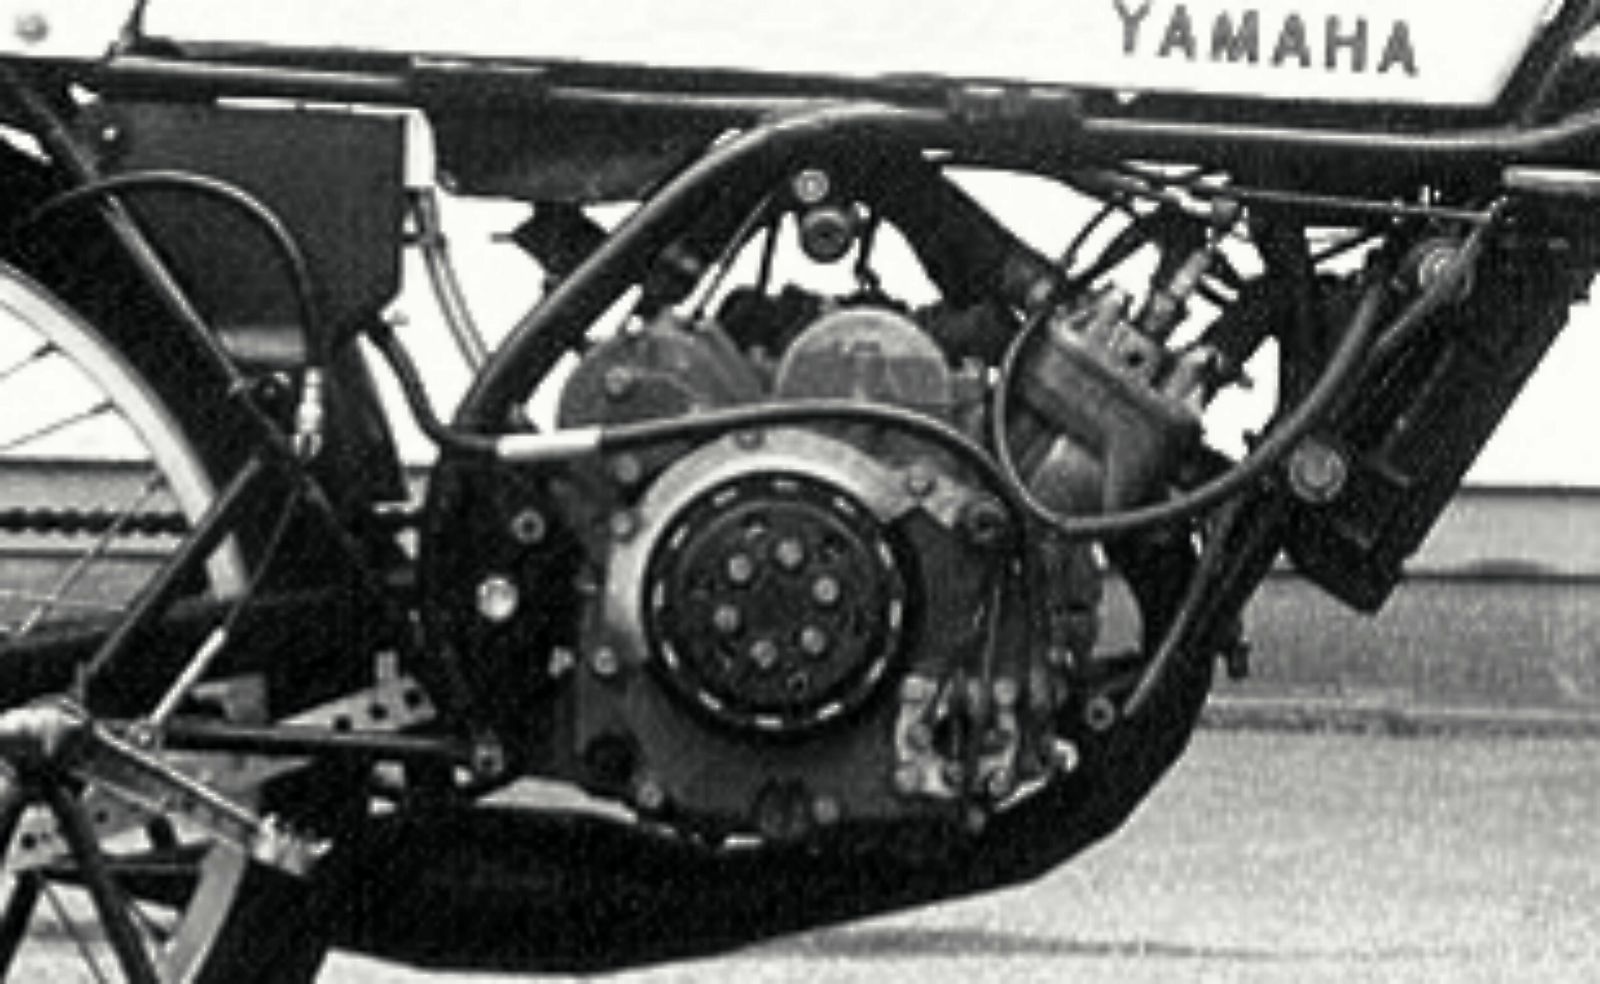 GIRO AZUL MEMÓRIA - A YAMAHA 50cc RF 302 e Ferry Brouwer, o 'Mestre das  2-tempos' - Yamaha Racing Brasil